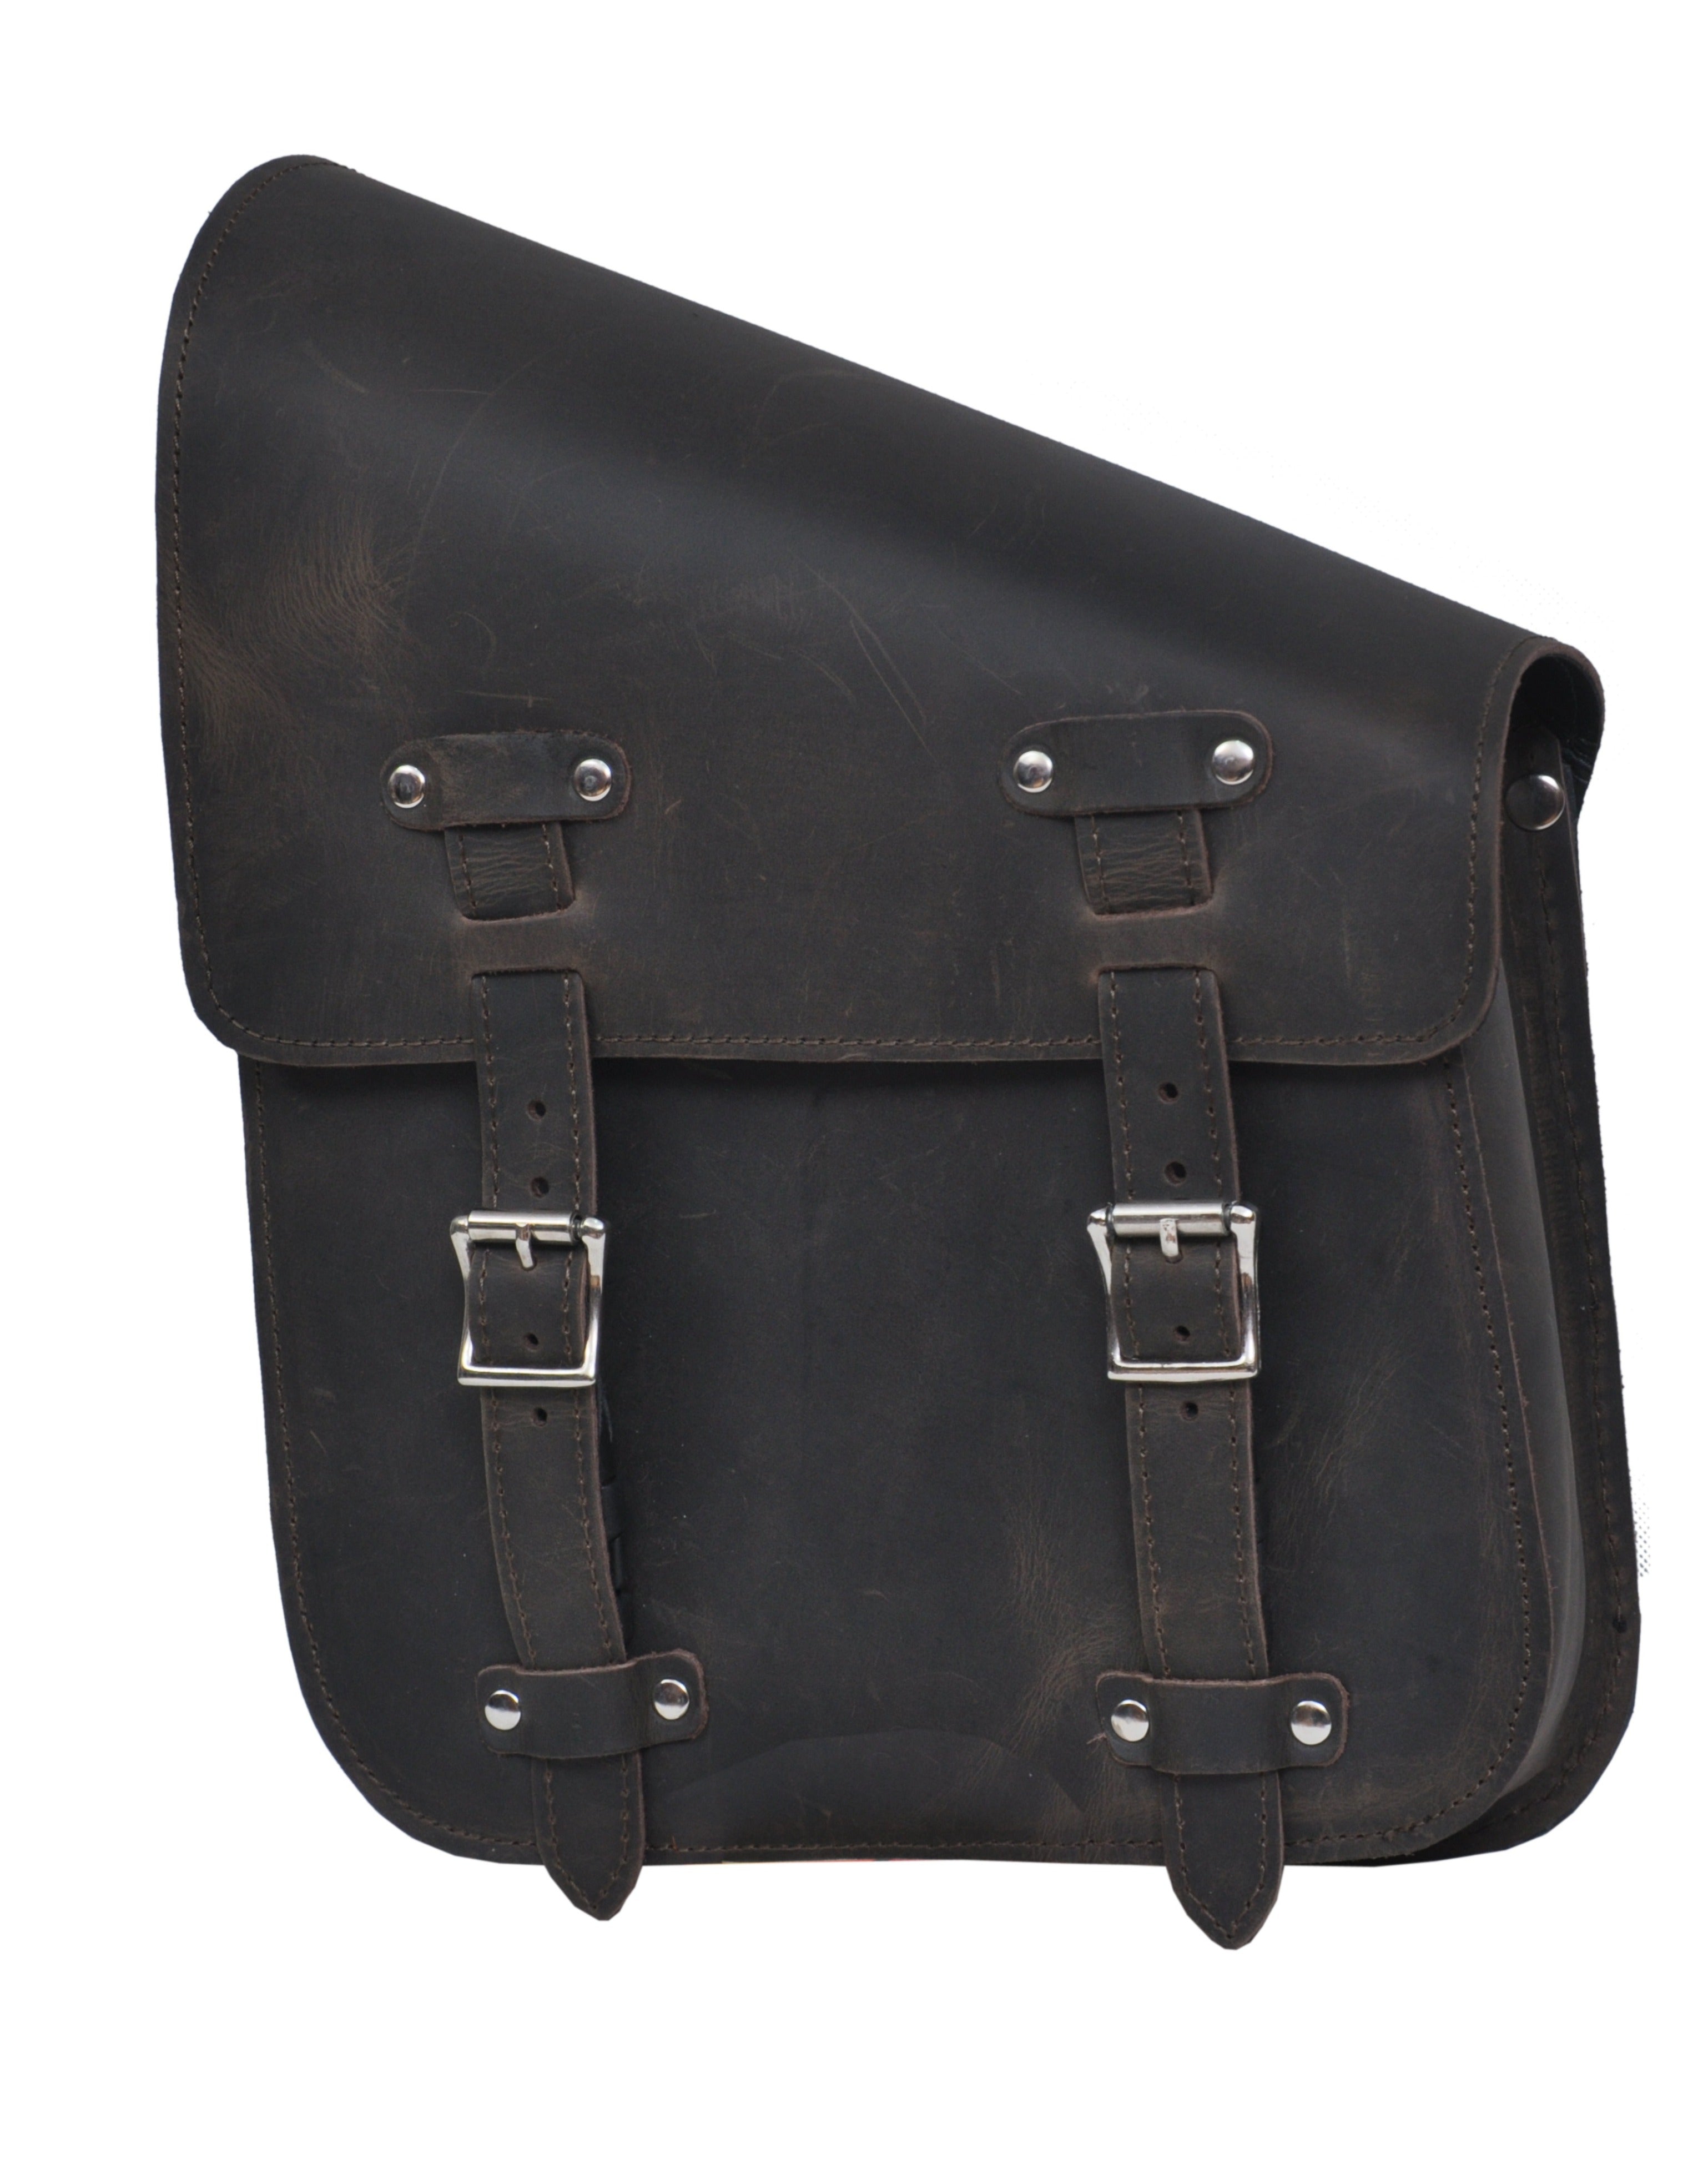 Unik International Hard Leather Swing Arm Bag